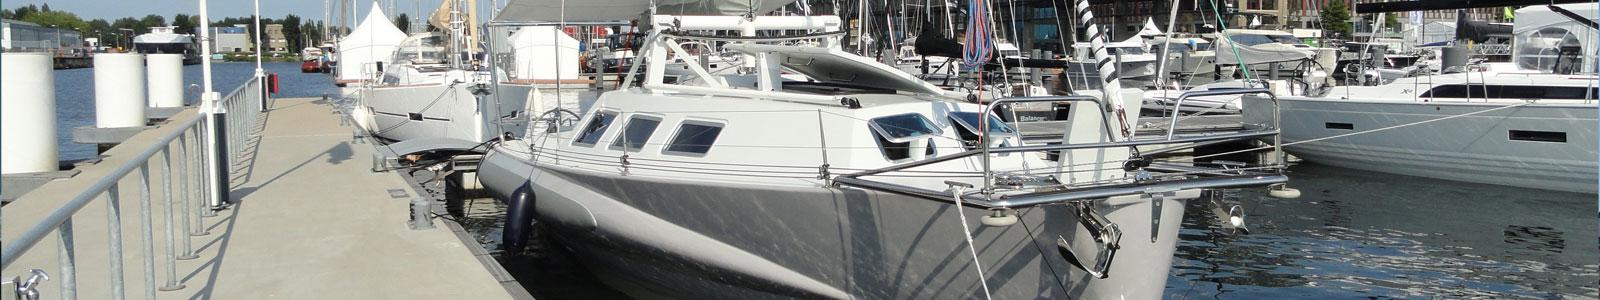 Hreko-Multi hybrid sailing yacht -Joso Perkovic